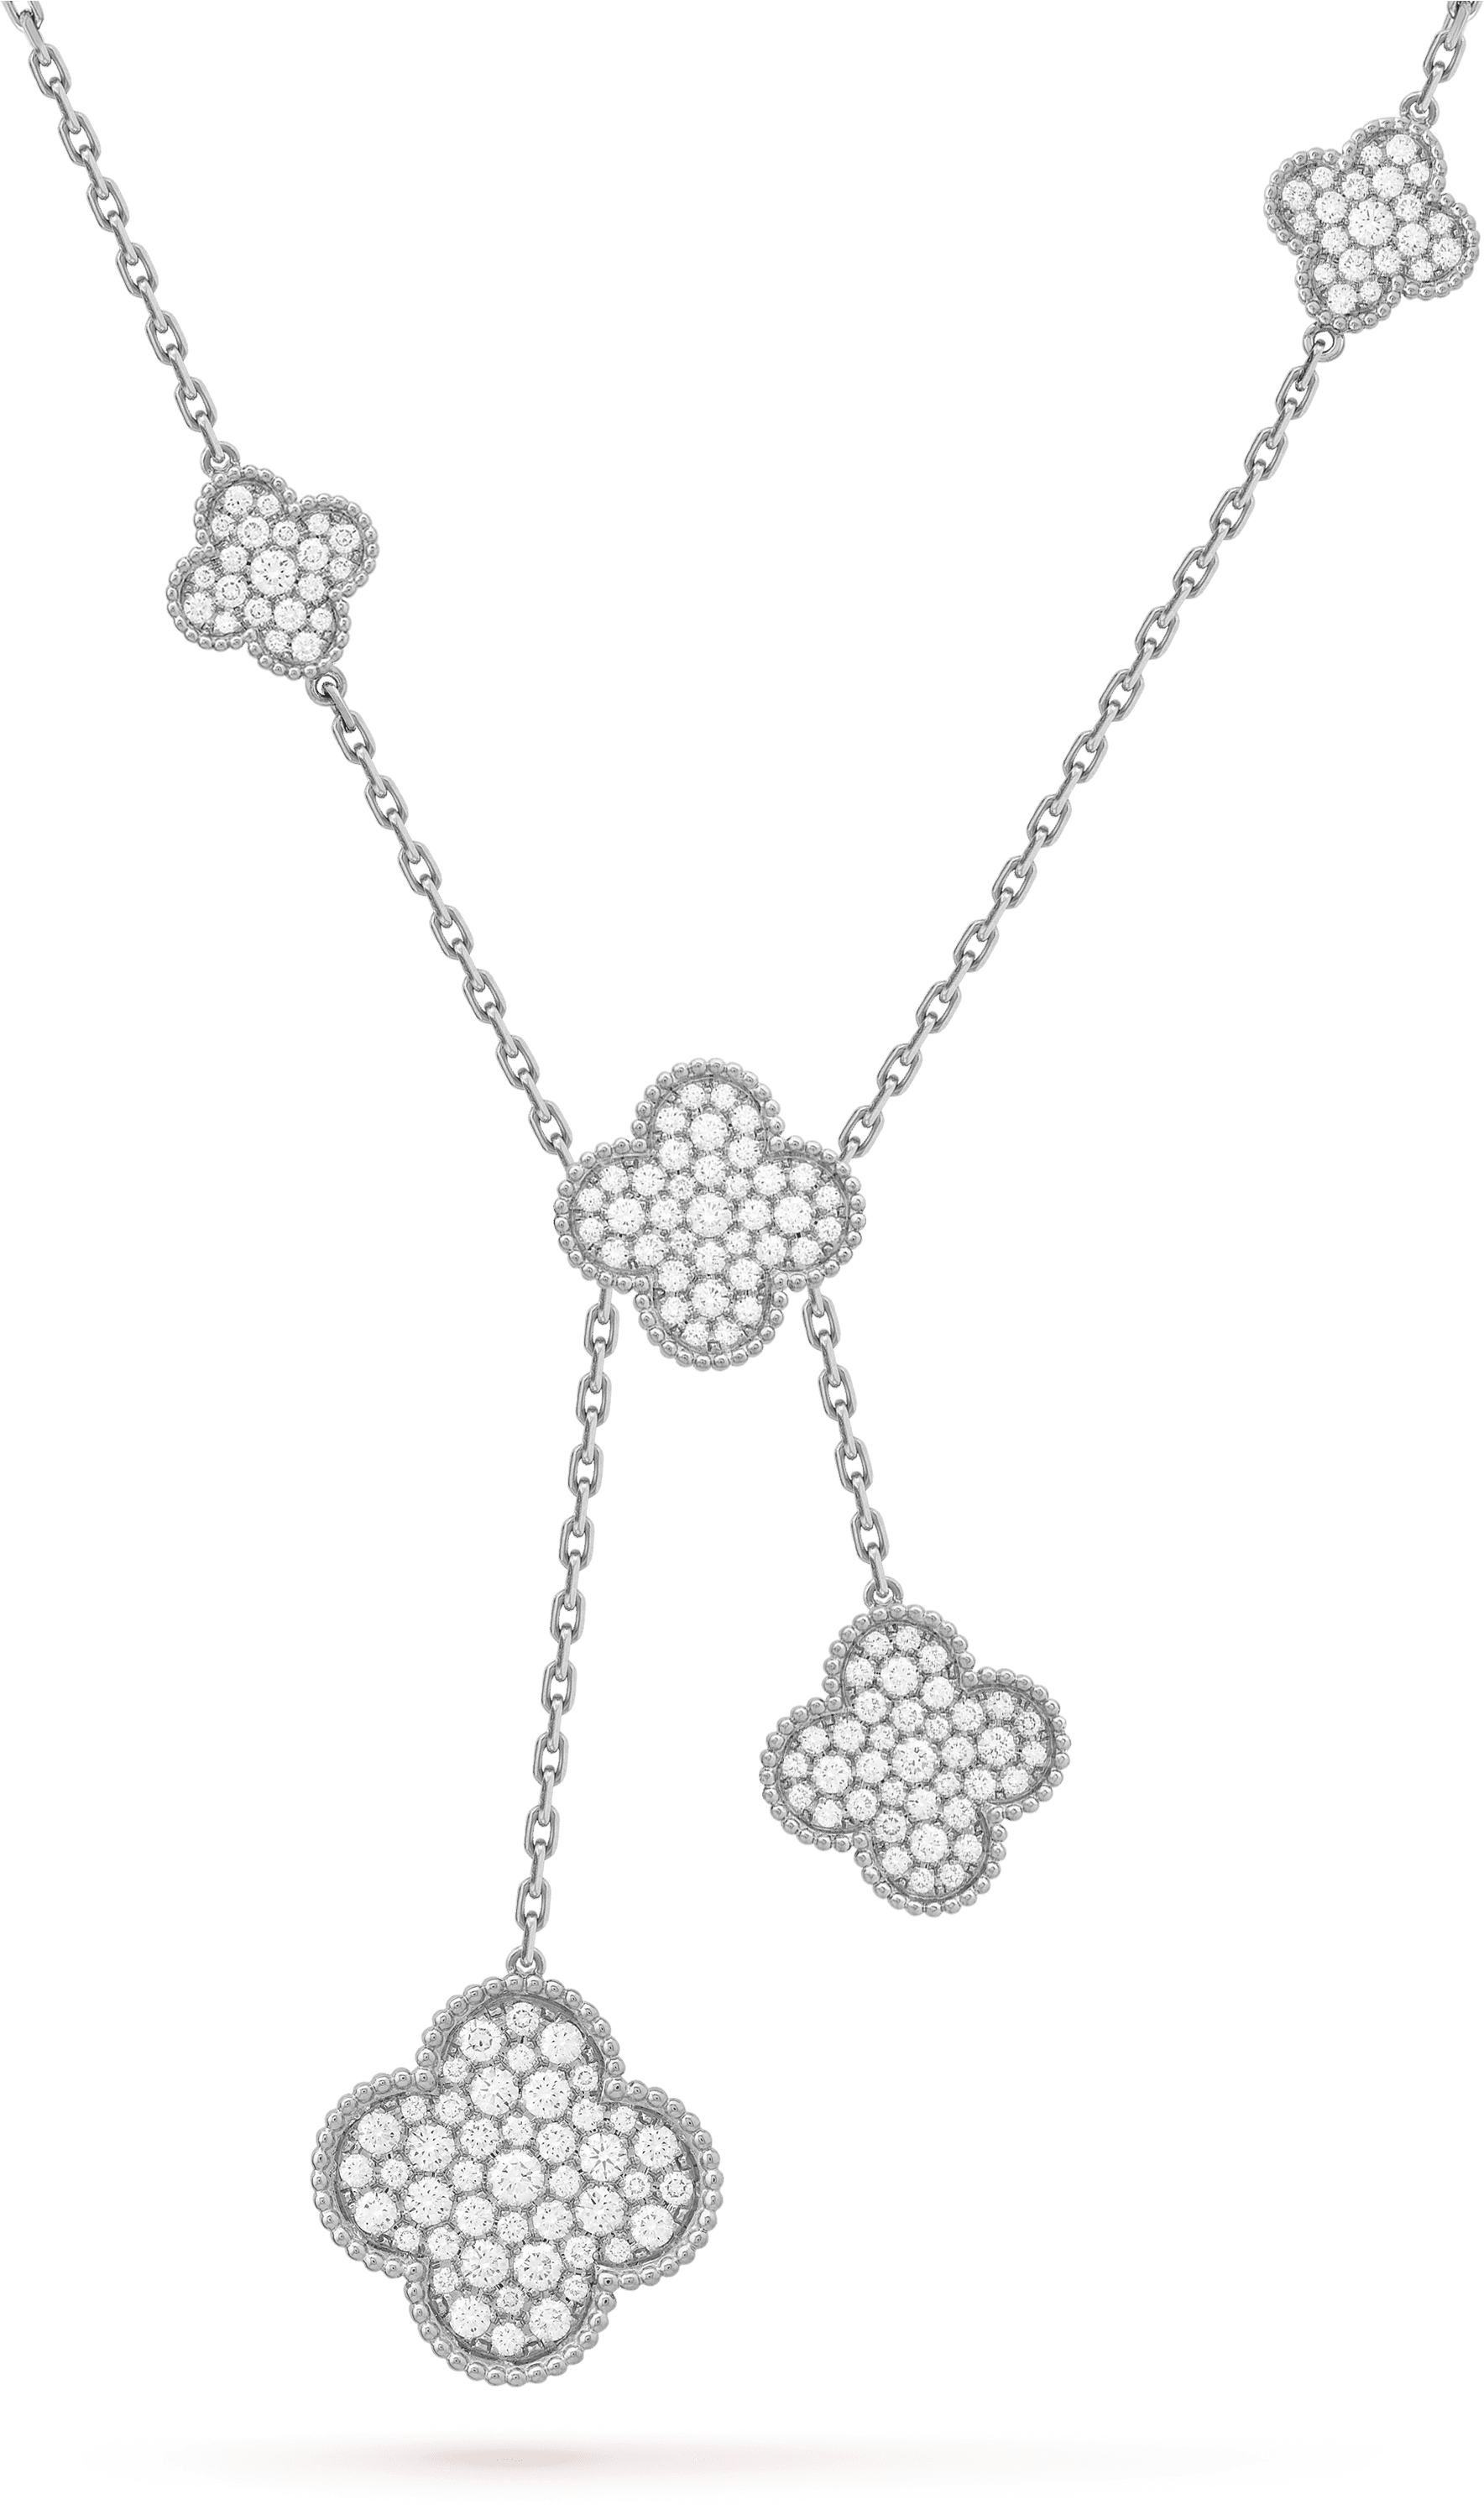 Diamond Necklace Png 1768 X 2984